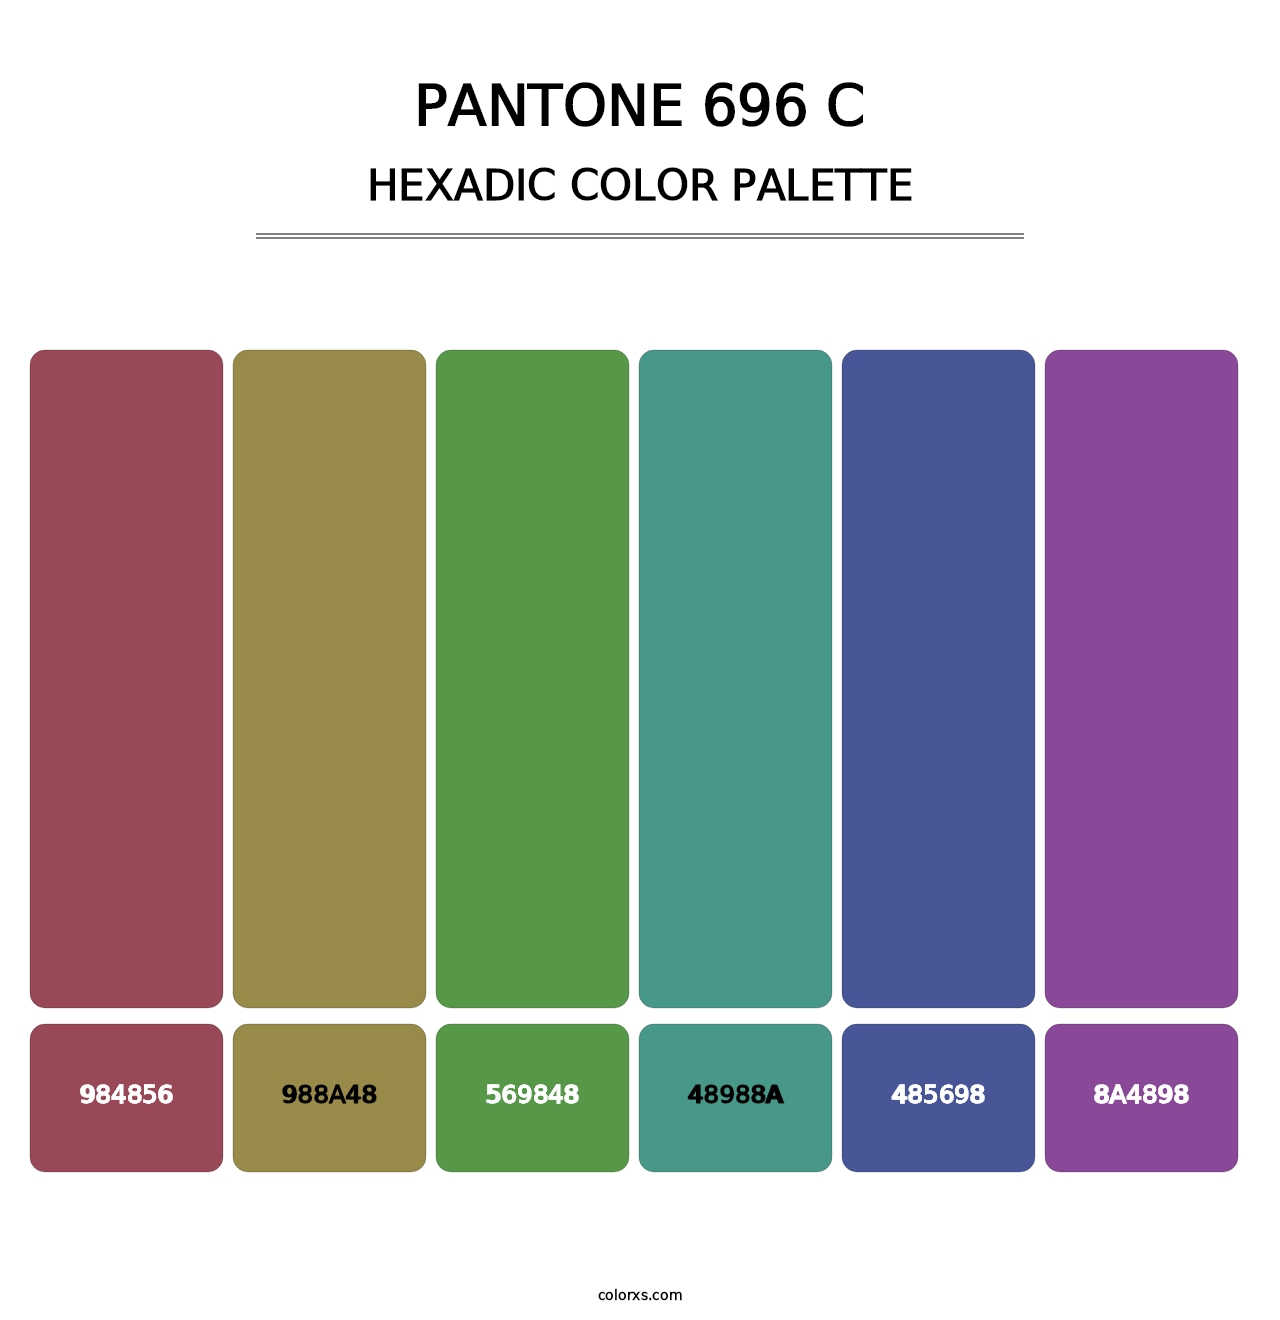 PANTONE 696 C - Hexadic Color Palette